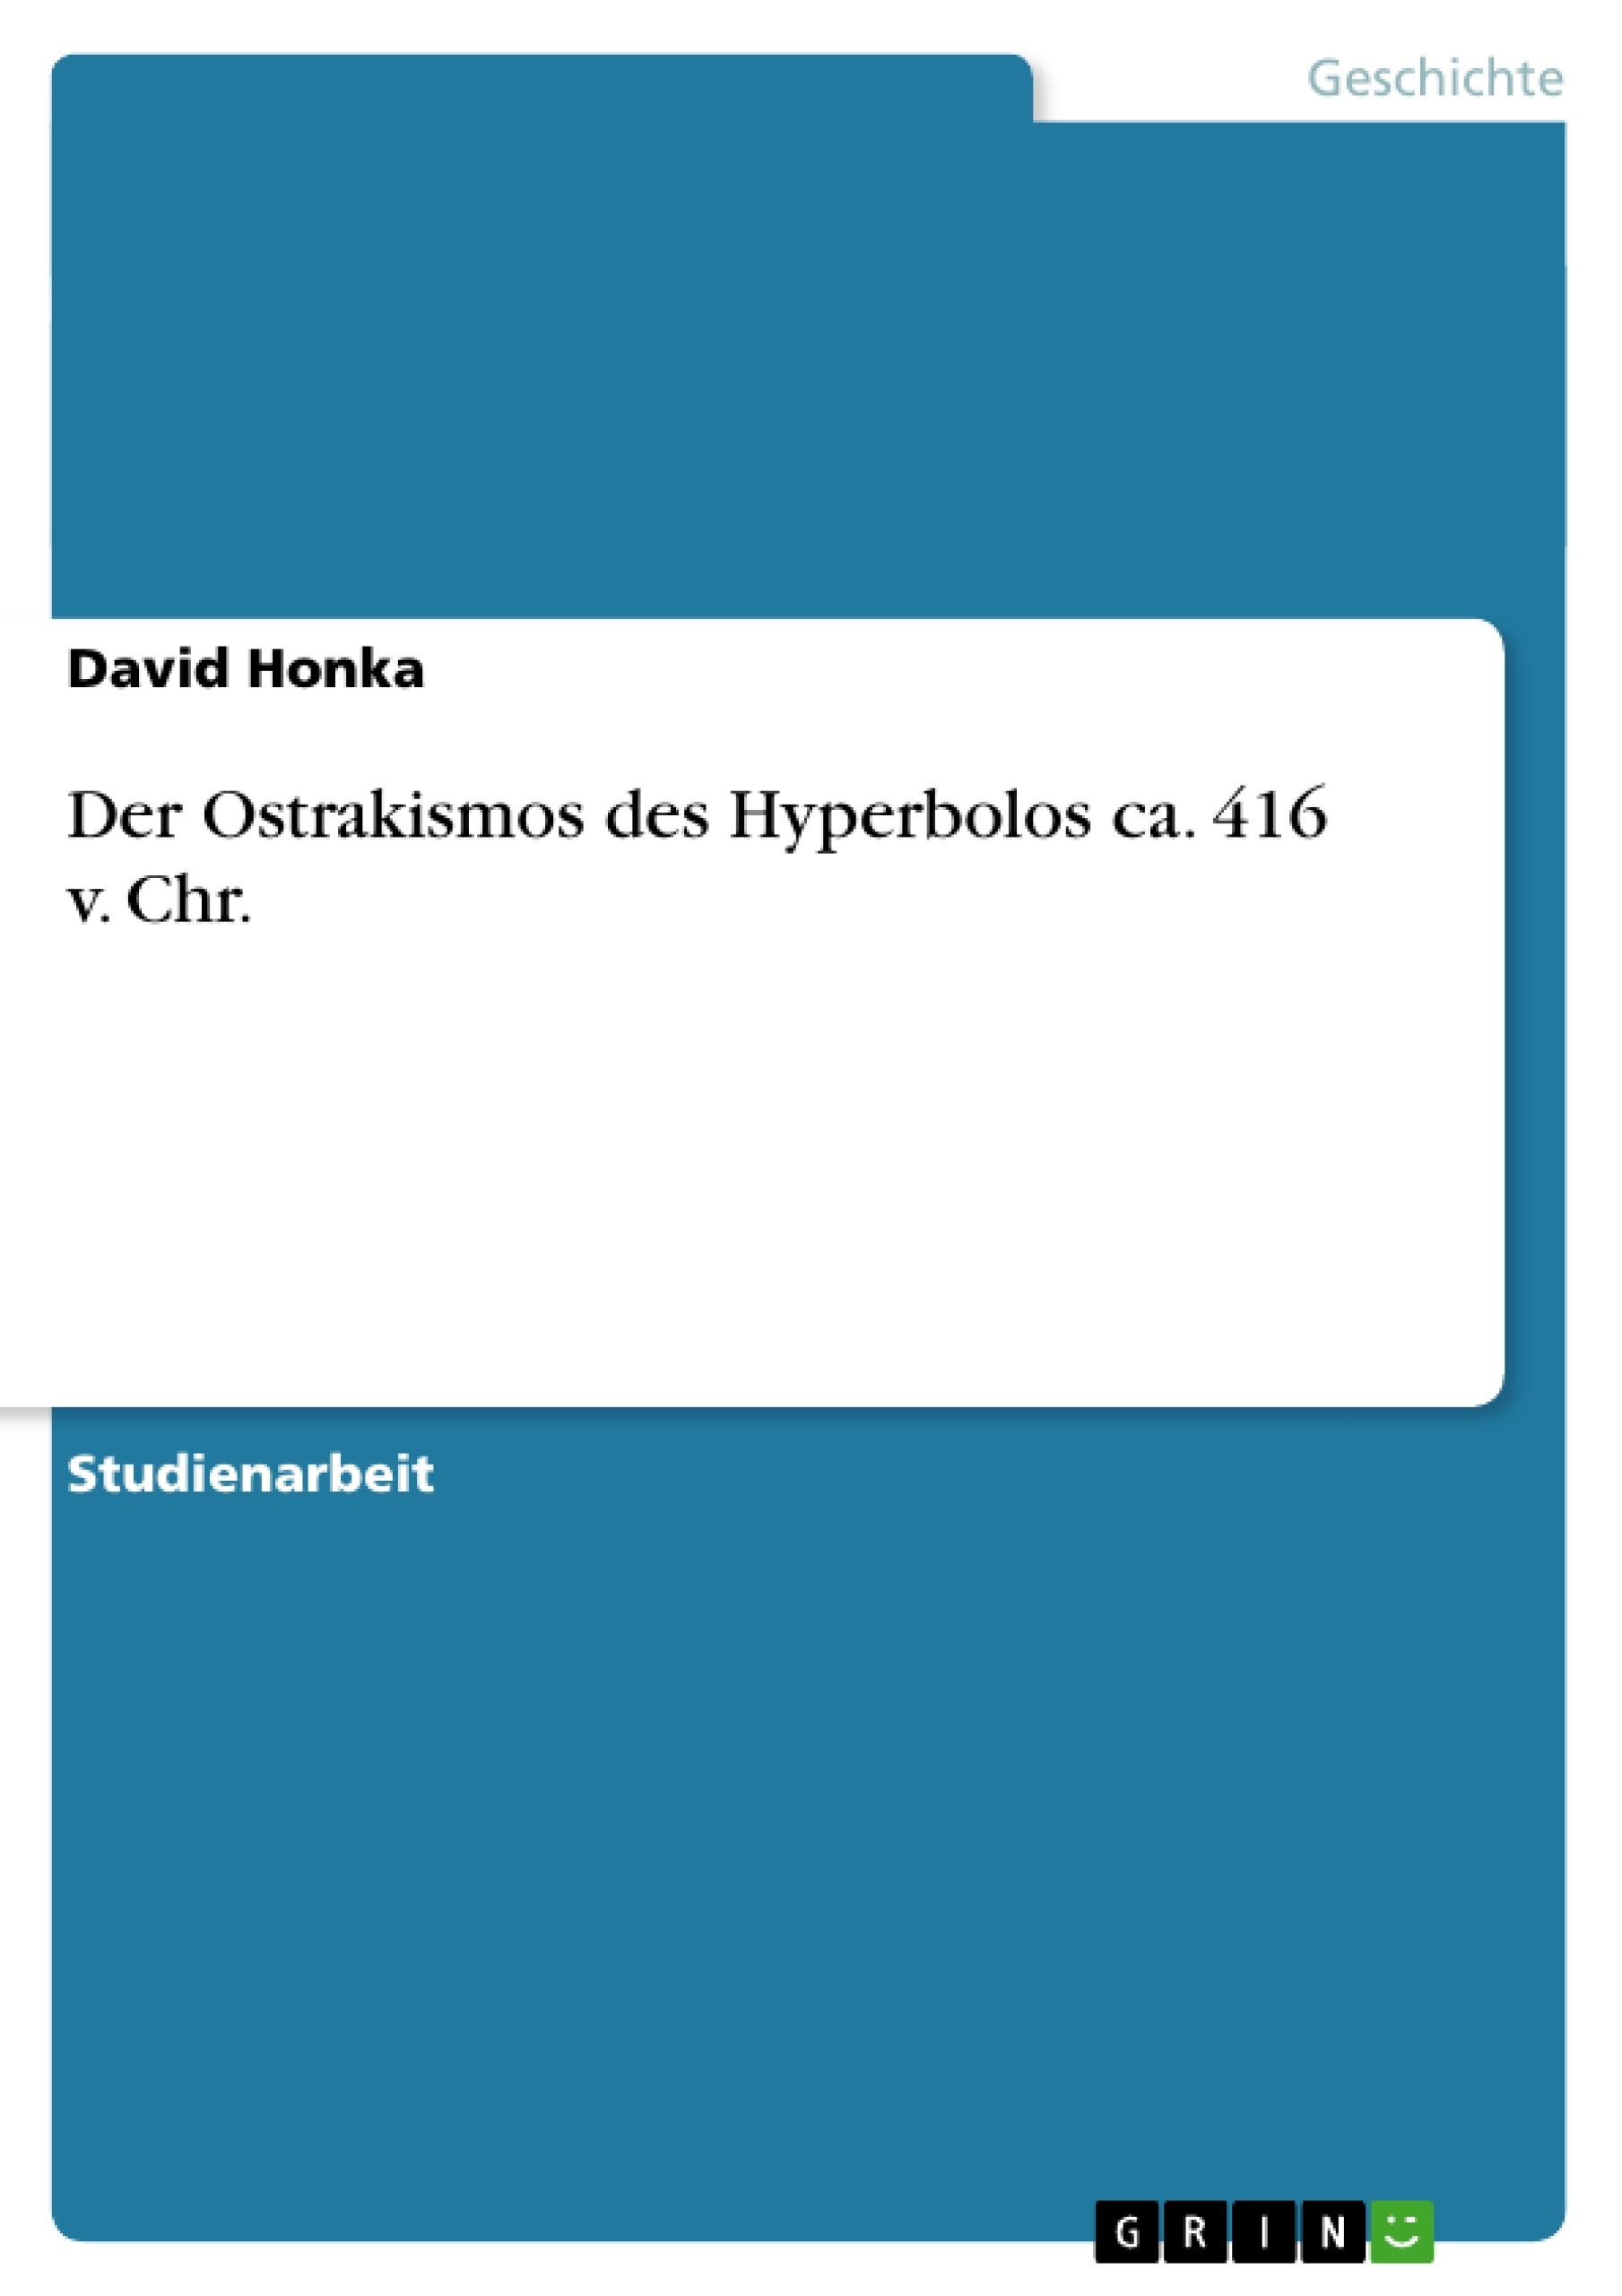 Title: Der Ostrakismos des Hyperbolos ca. 416 v. Chr.